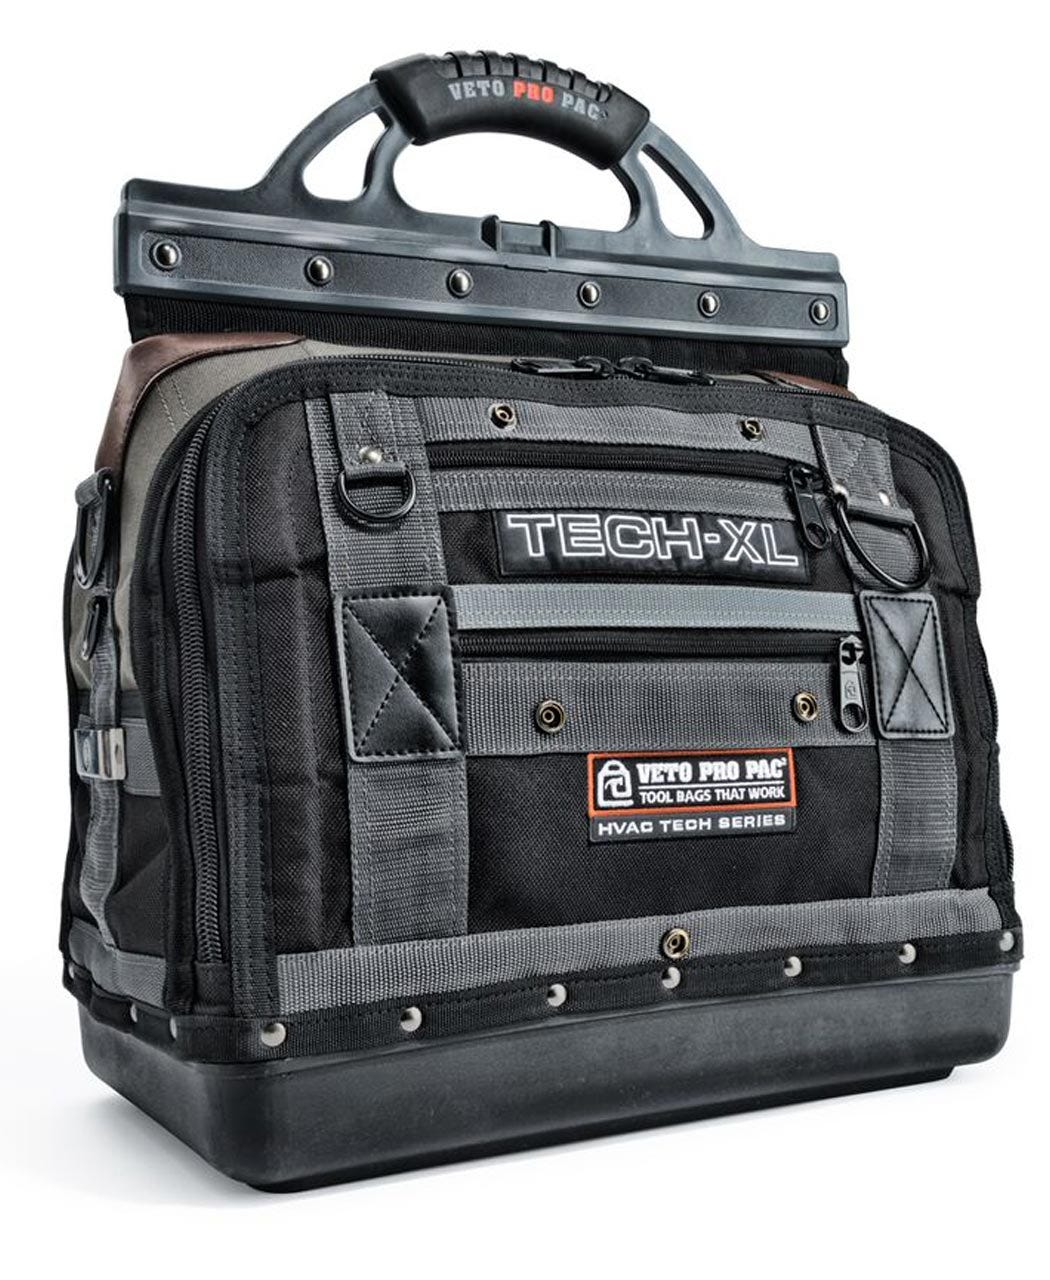 15 Pockets Electrician Technician Tool Backpack Shoulder Bag | eBay